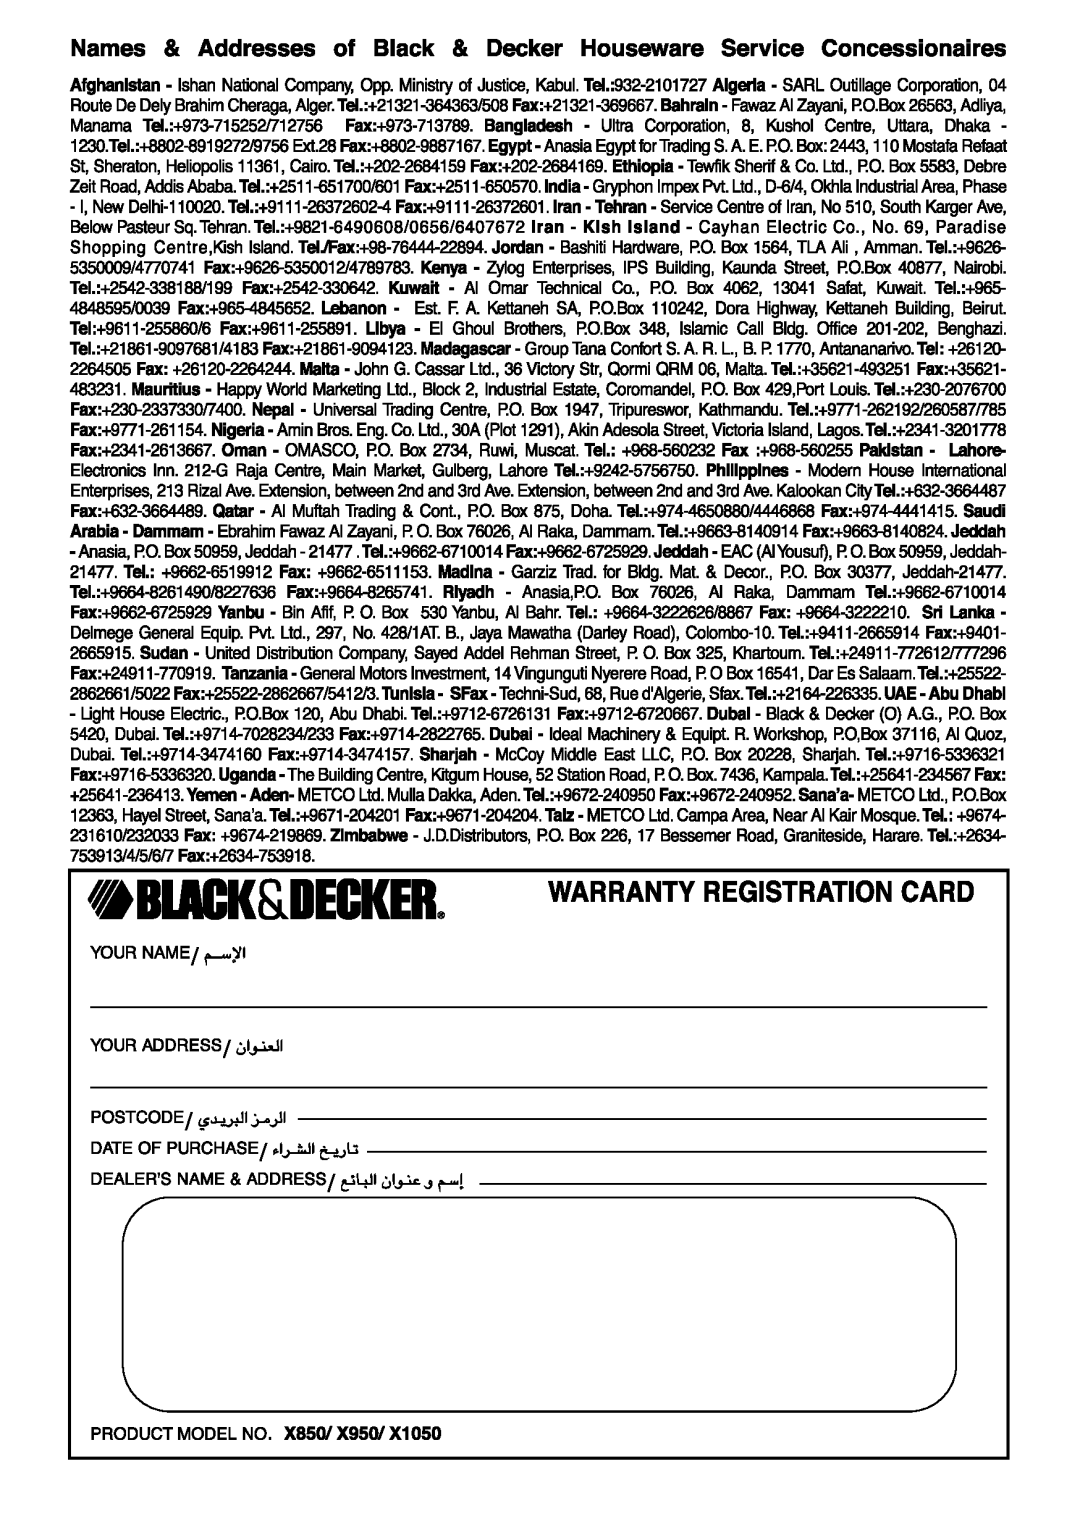 Black & Decker X950, X1050 manual 